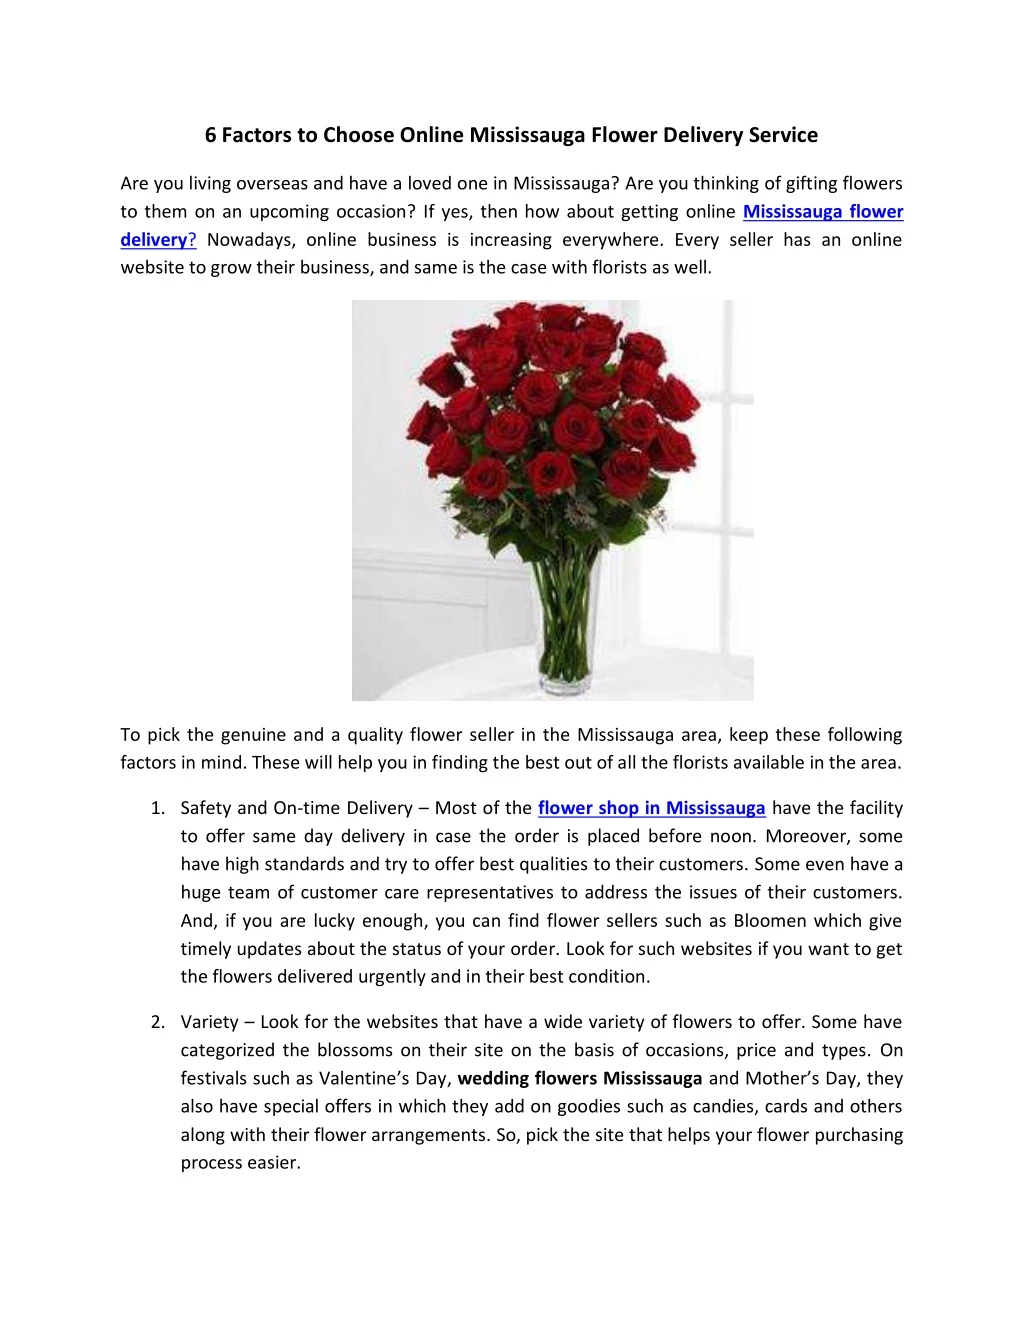 6 factors to choose online mississauga flower